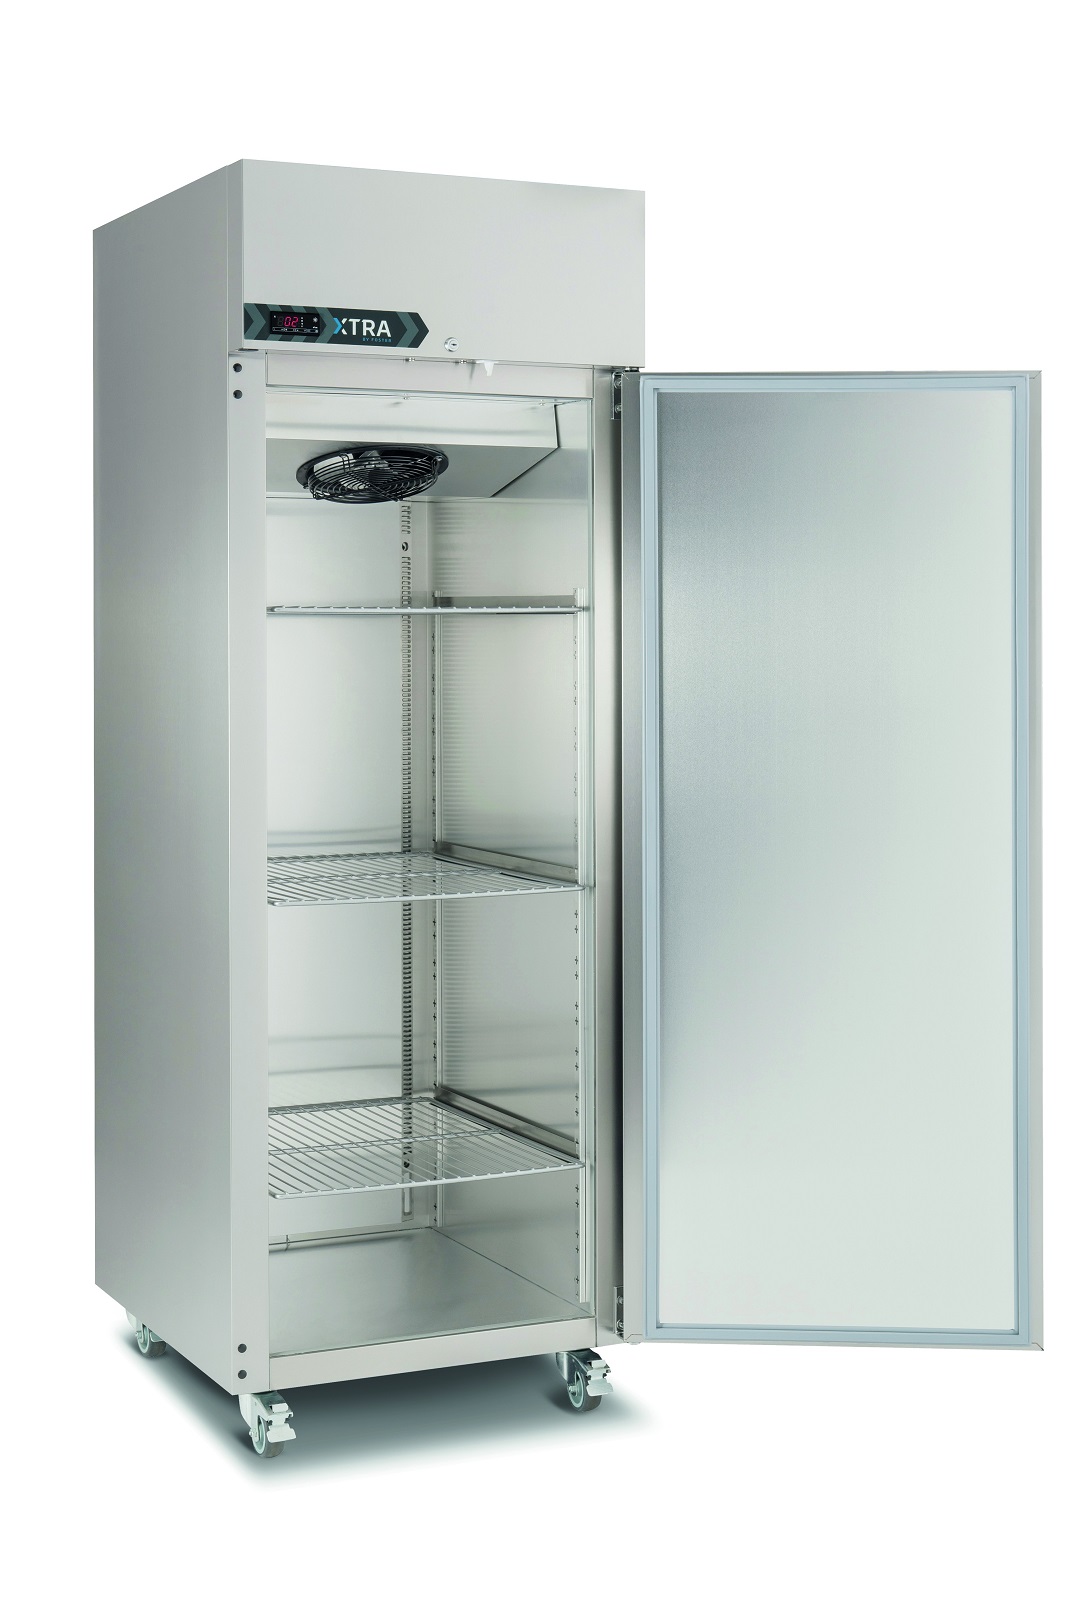 Foster Xtra XR600L Single Door Upright Gastronorm Freezer